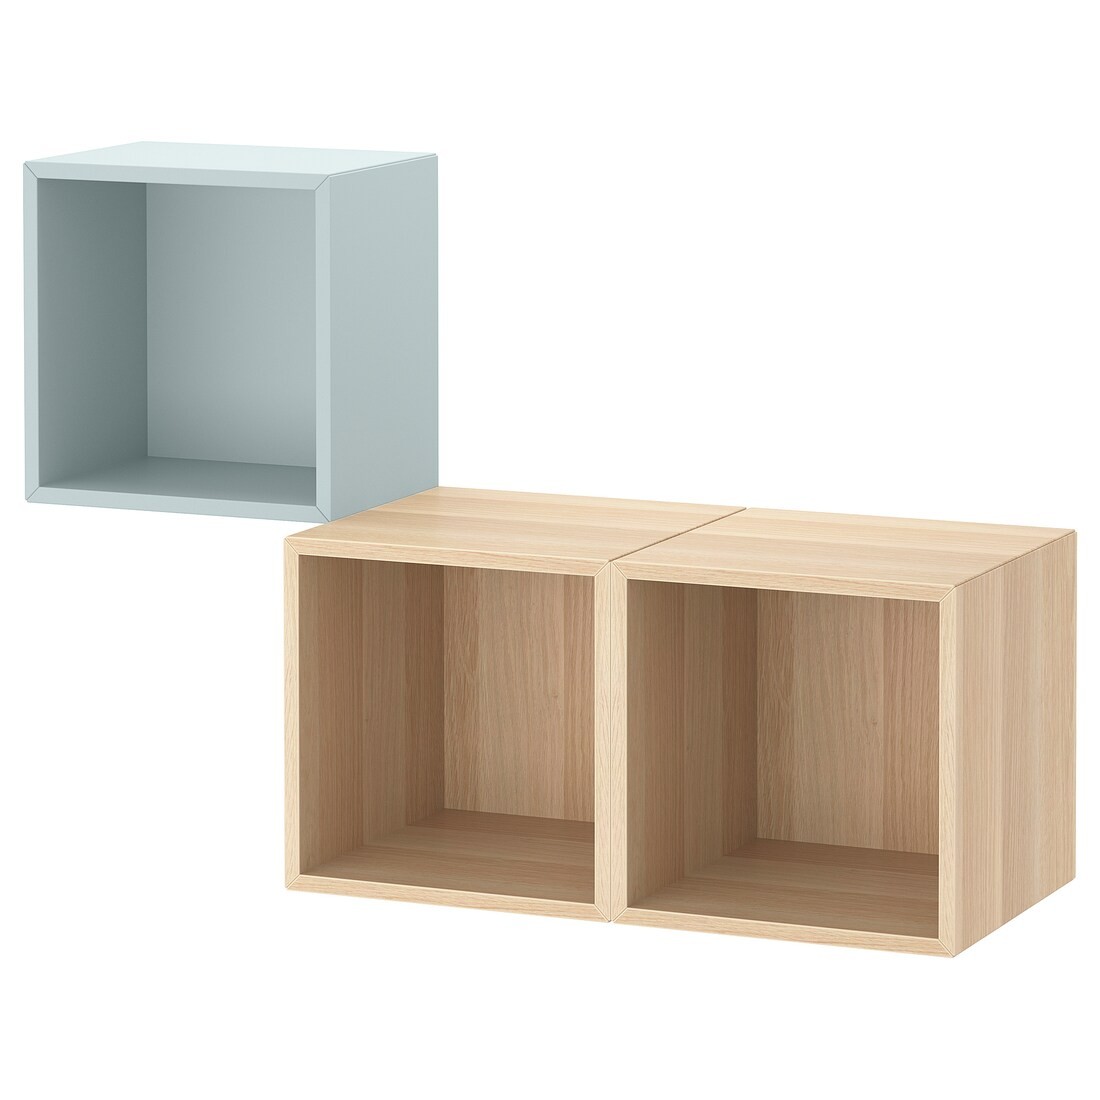 IKEA EKET Комбинация настенных шкафов, светлый серо-голубой/белый дуб, 105x35x70 см 09521369 095.213.69